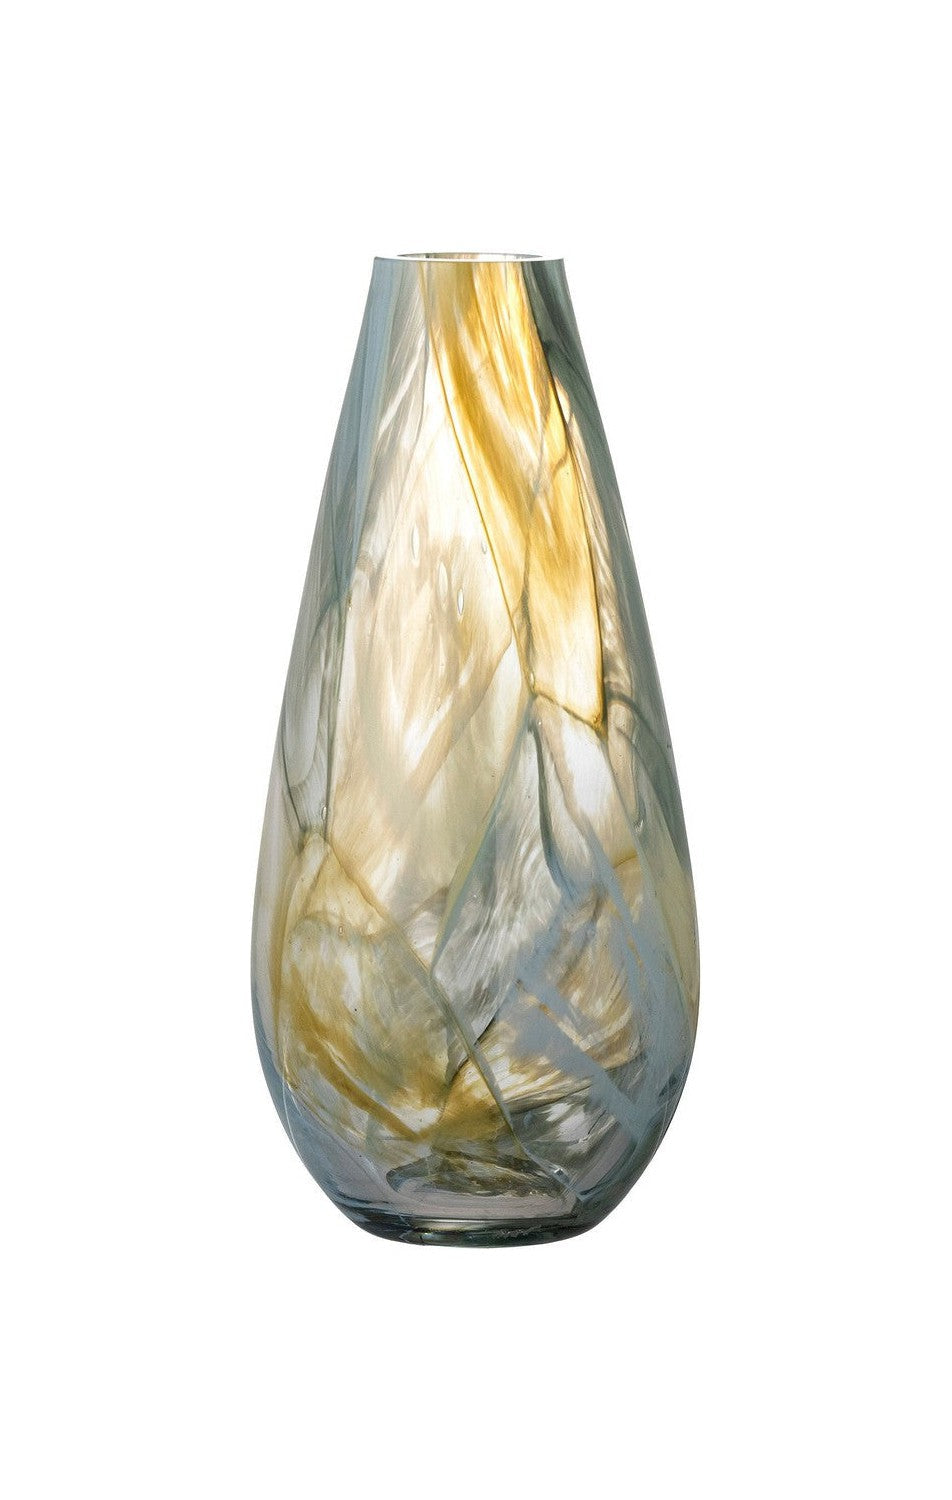 Creative Collection Lenoah Vase, Yellow, Glass